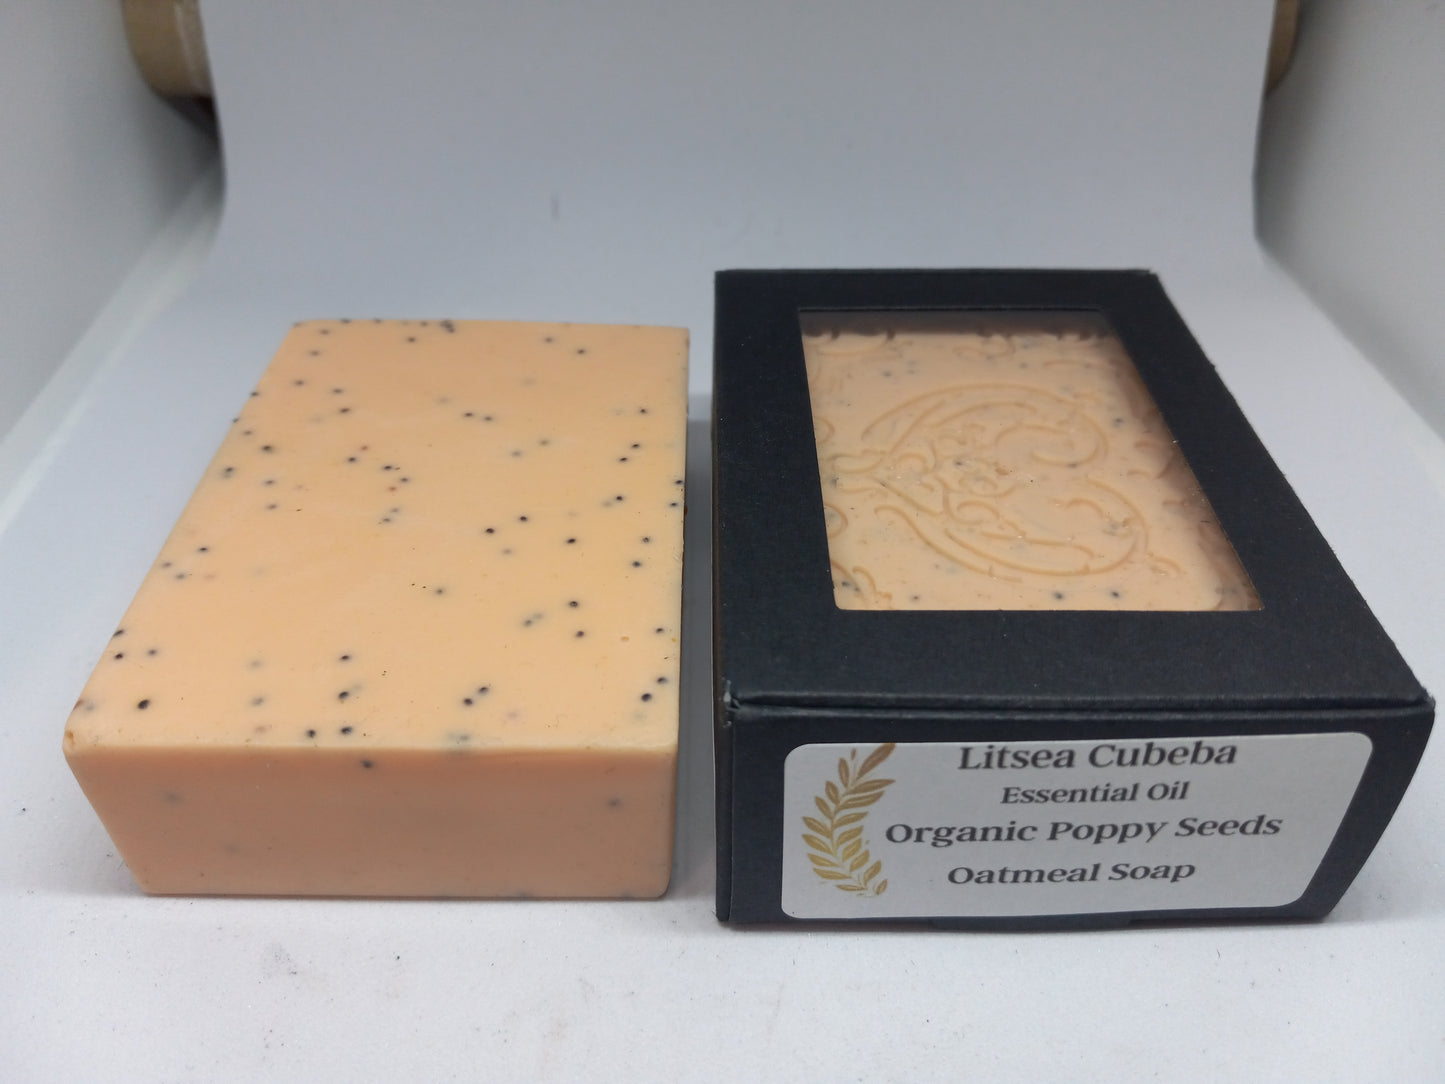 Litsea Cubeba - Hand Poured Exfoliating Oatmeal Soap